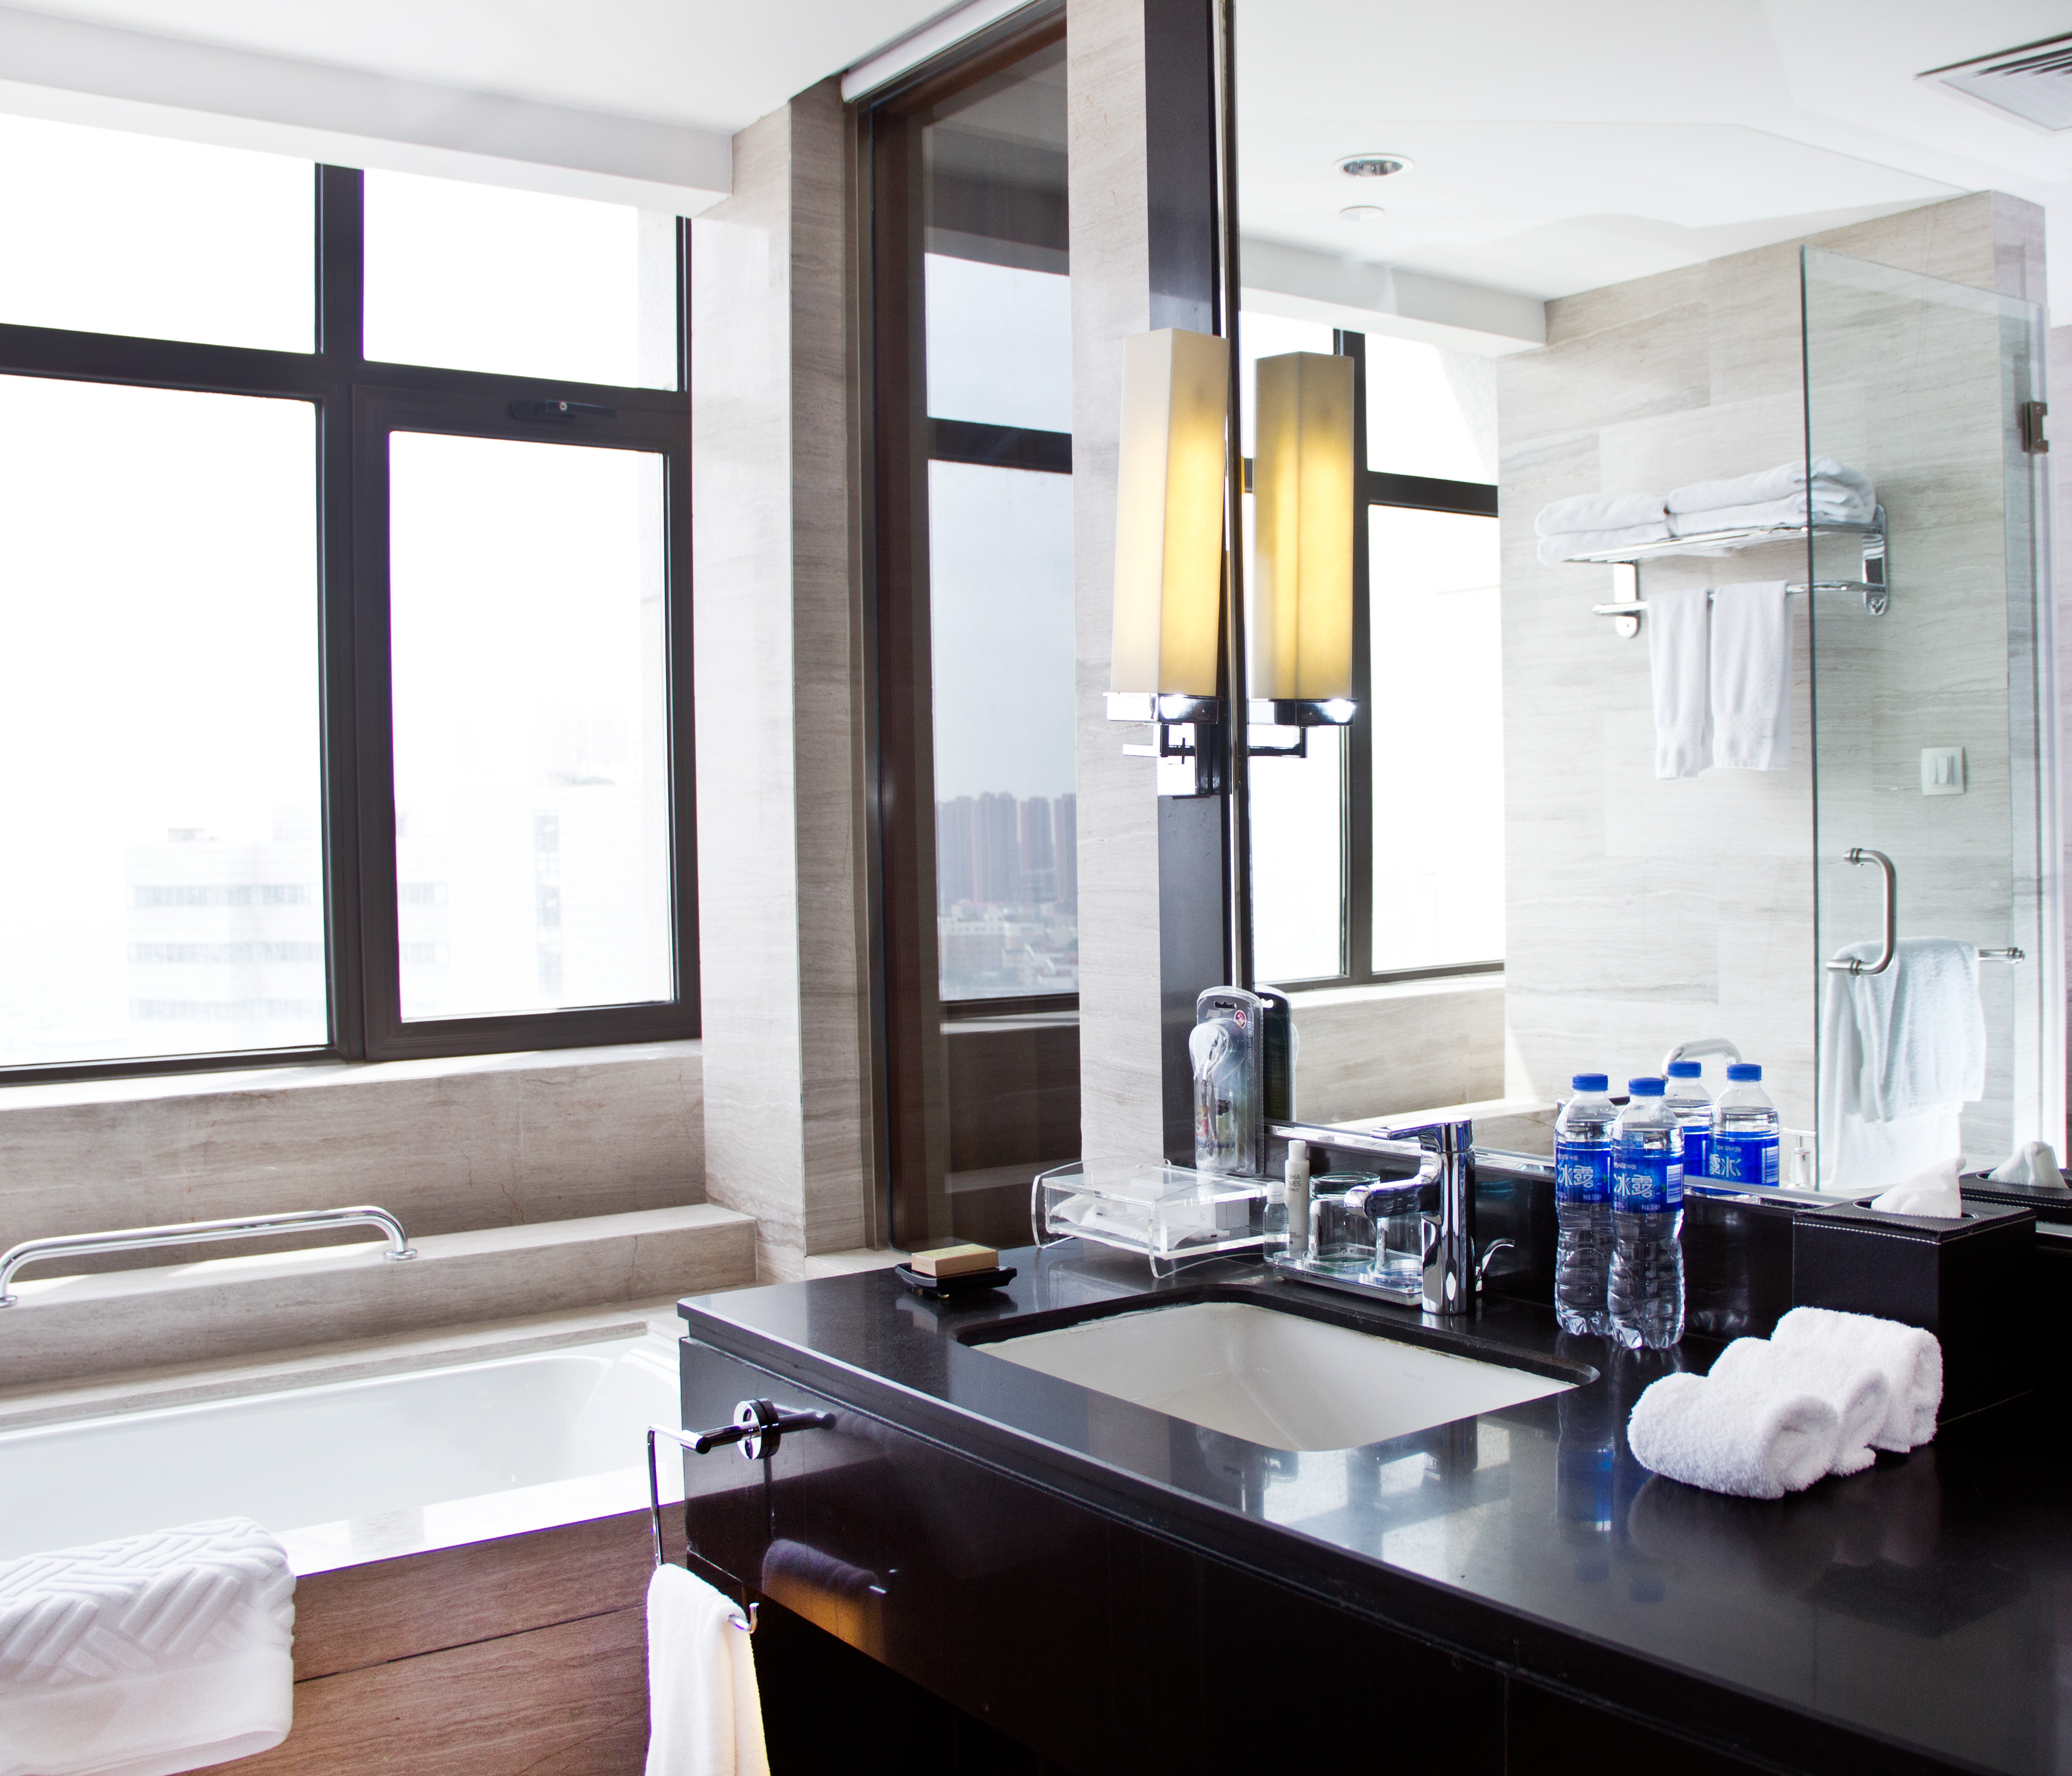 King executive bathroom vanity mirror, sink, hand towels, tub, and window